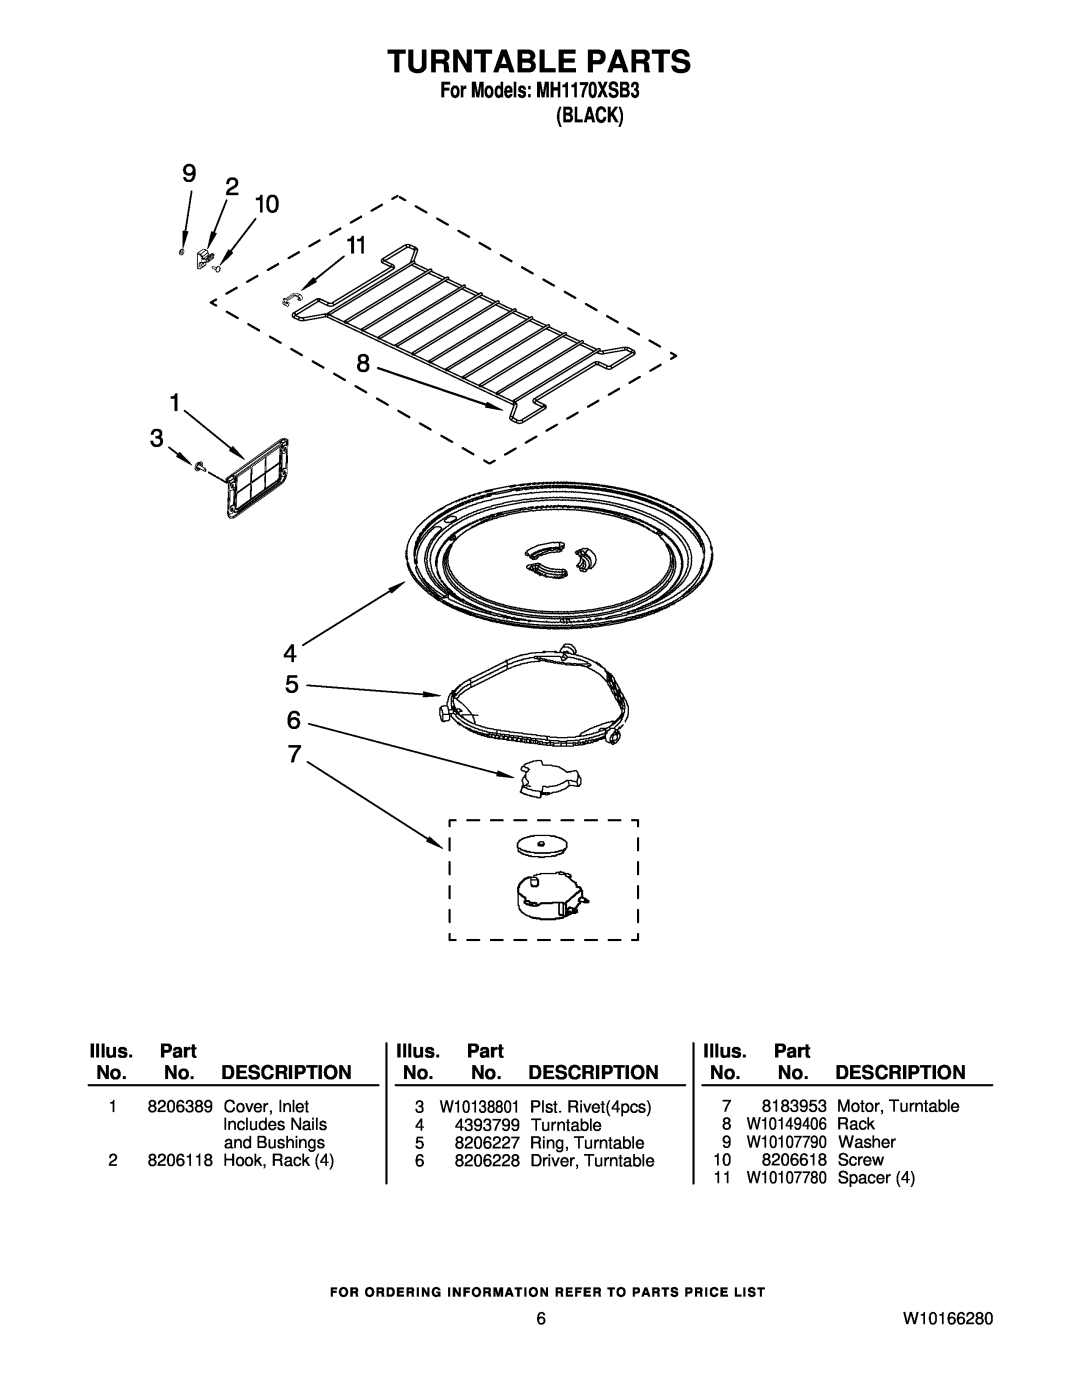 Whirlpool MH1170XSB3 manual Turntable Parts, Illus. Part No. No. DESCRIPTION 